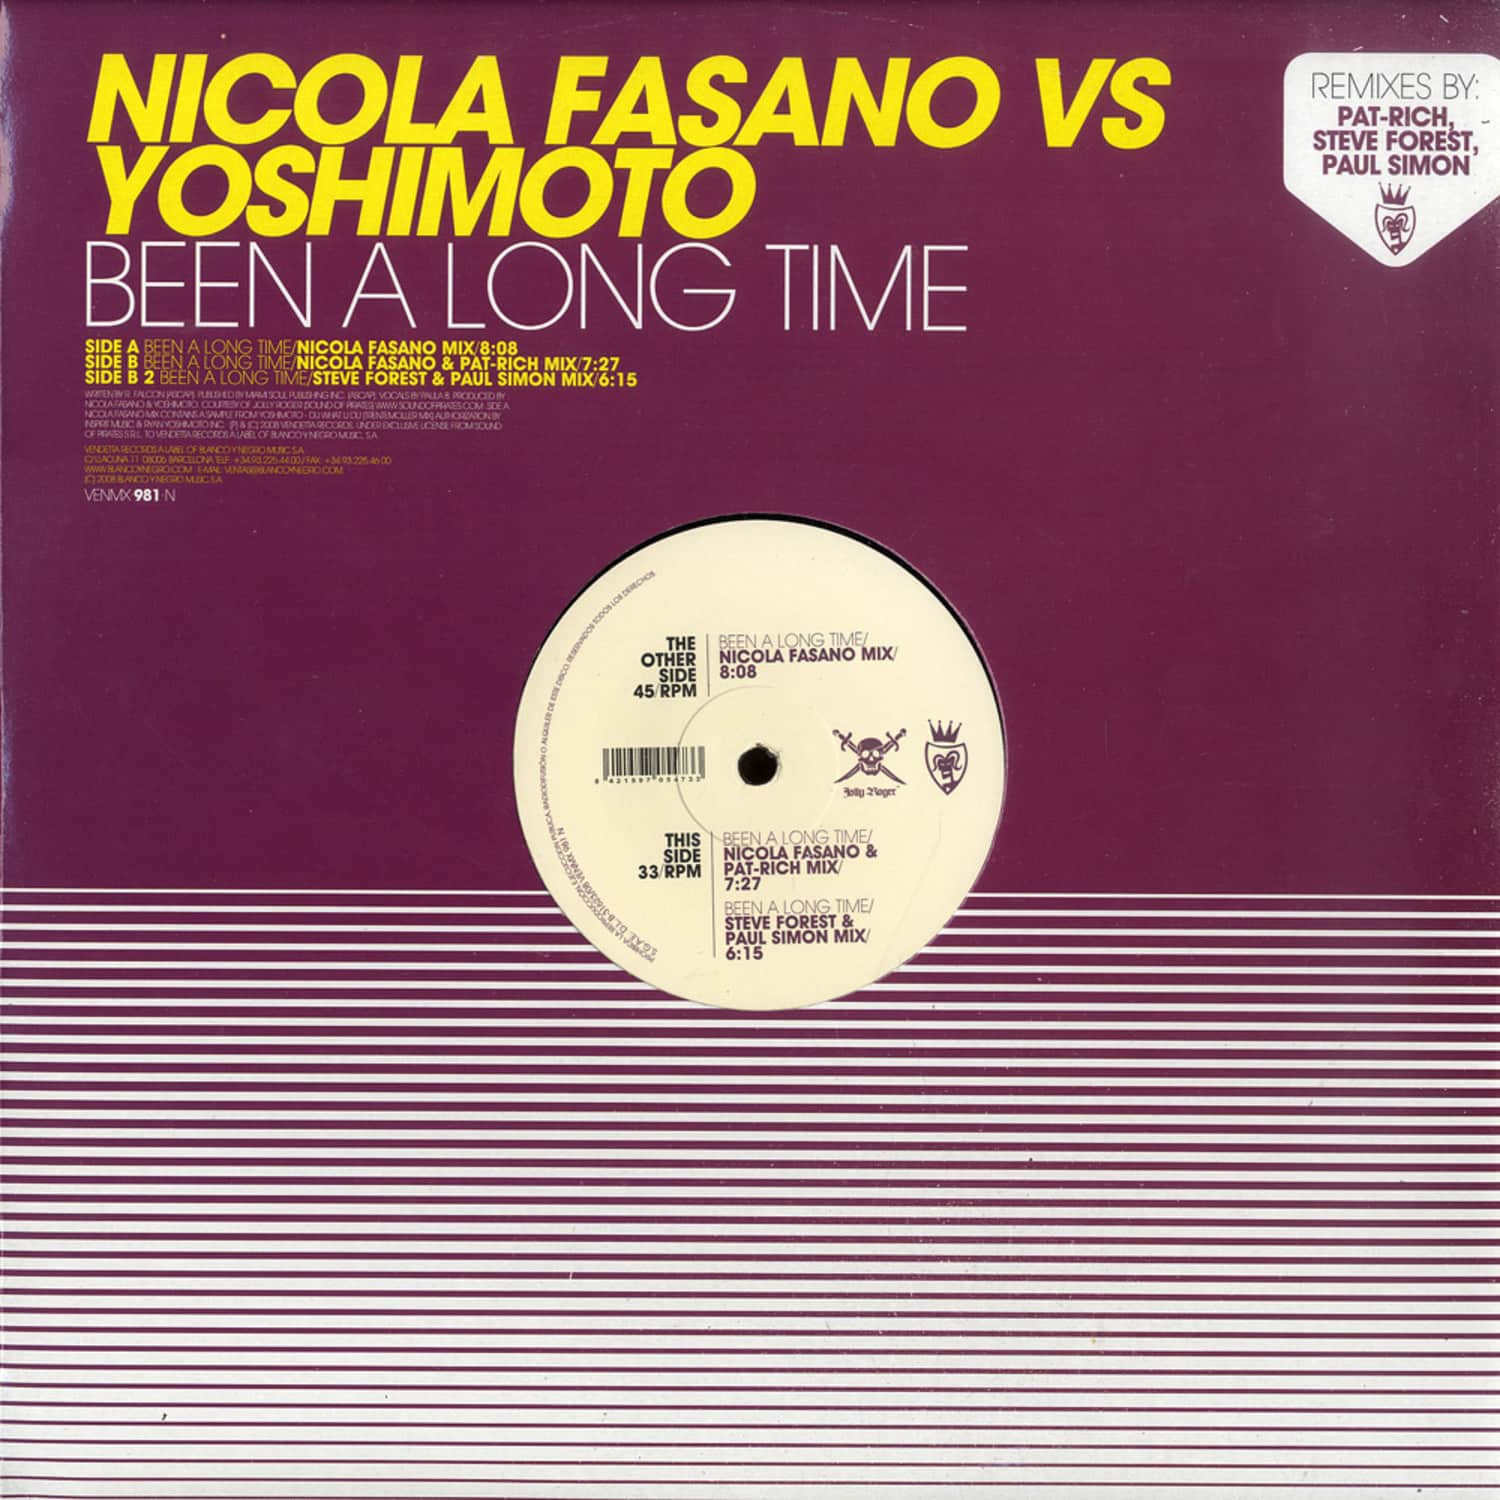 Nicola Fasano vs. Yoshimoto - BEEN A LONG TIME